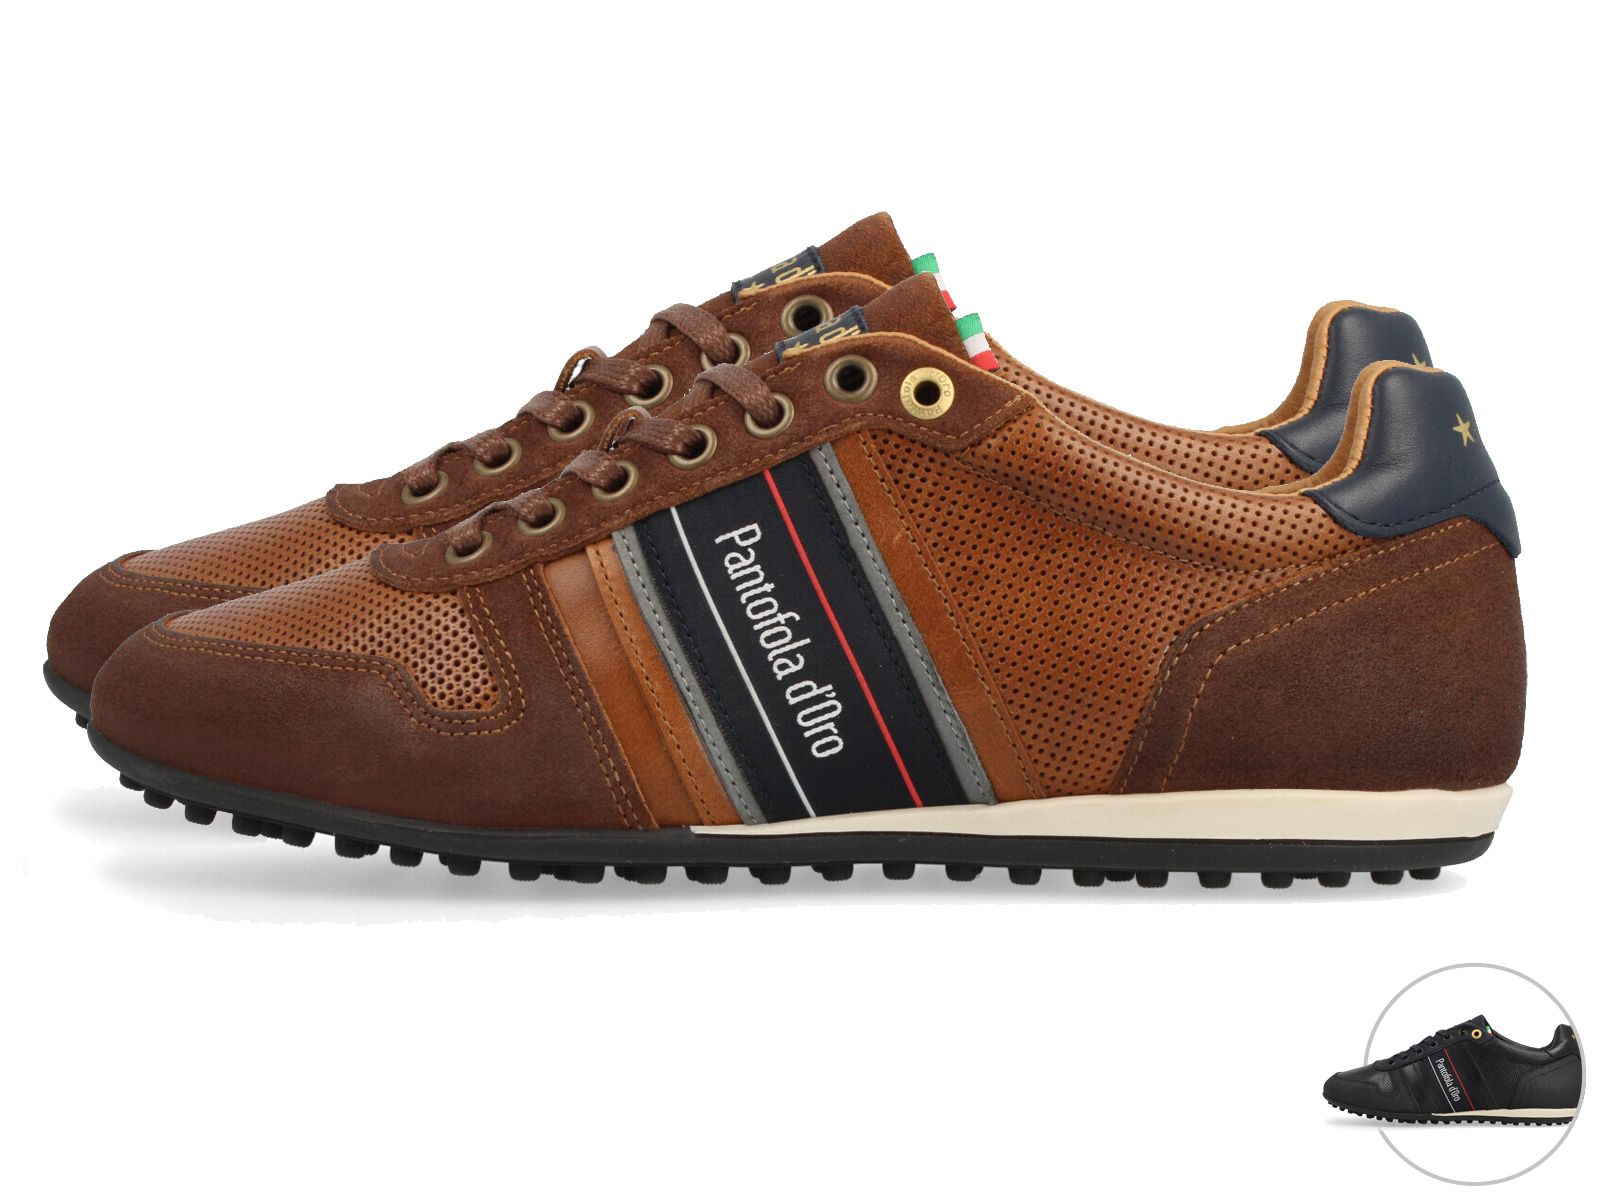 pantofola-doro-zapponeta-uomo-sneakers